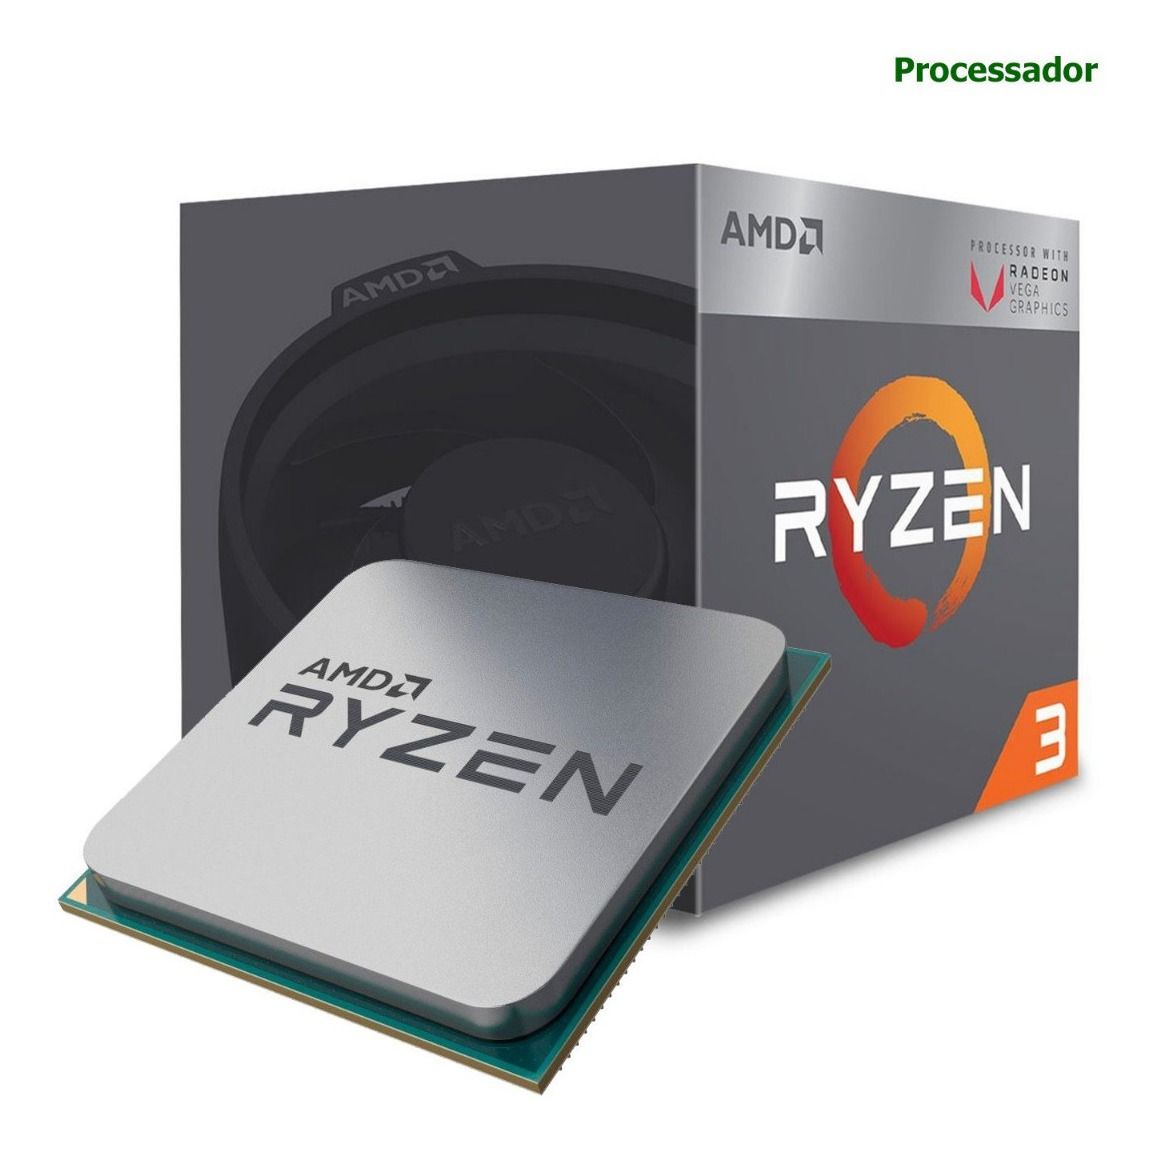 Procesador AMD Ryzen 3 3200G, 3.60GHz, 4MB L3, 4 Core, AM4, 14nm, 65W